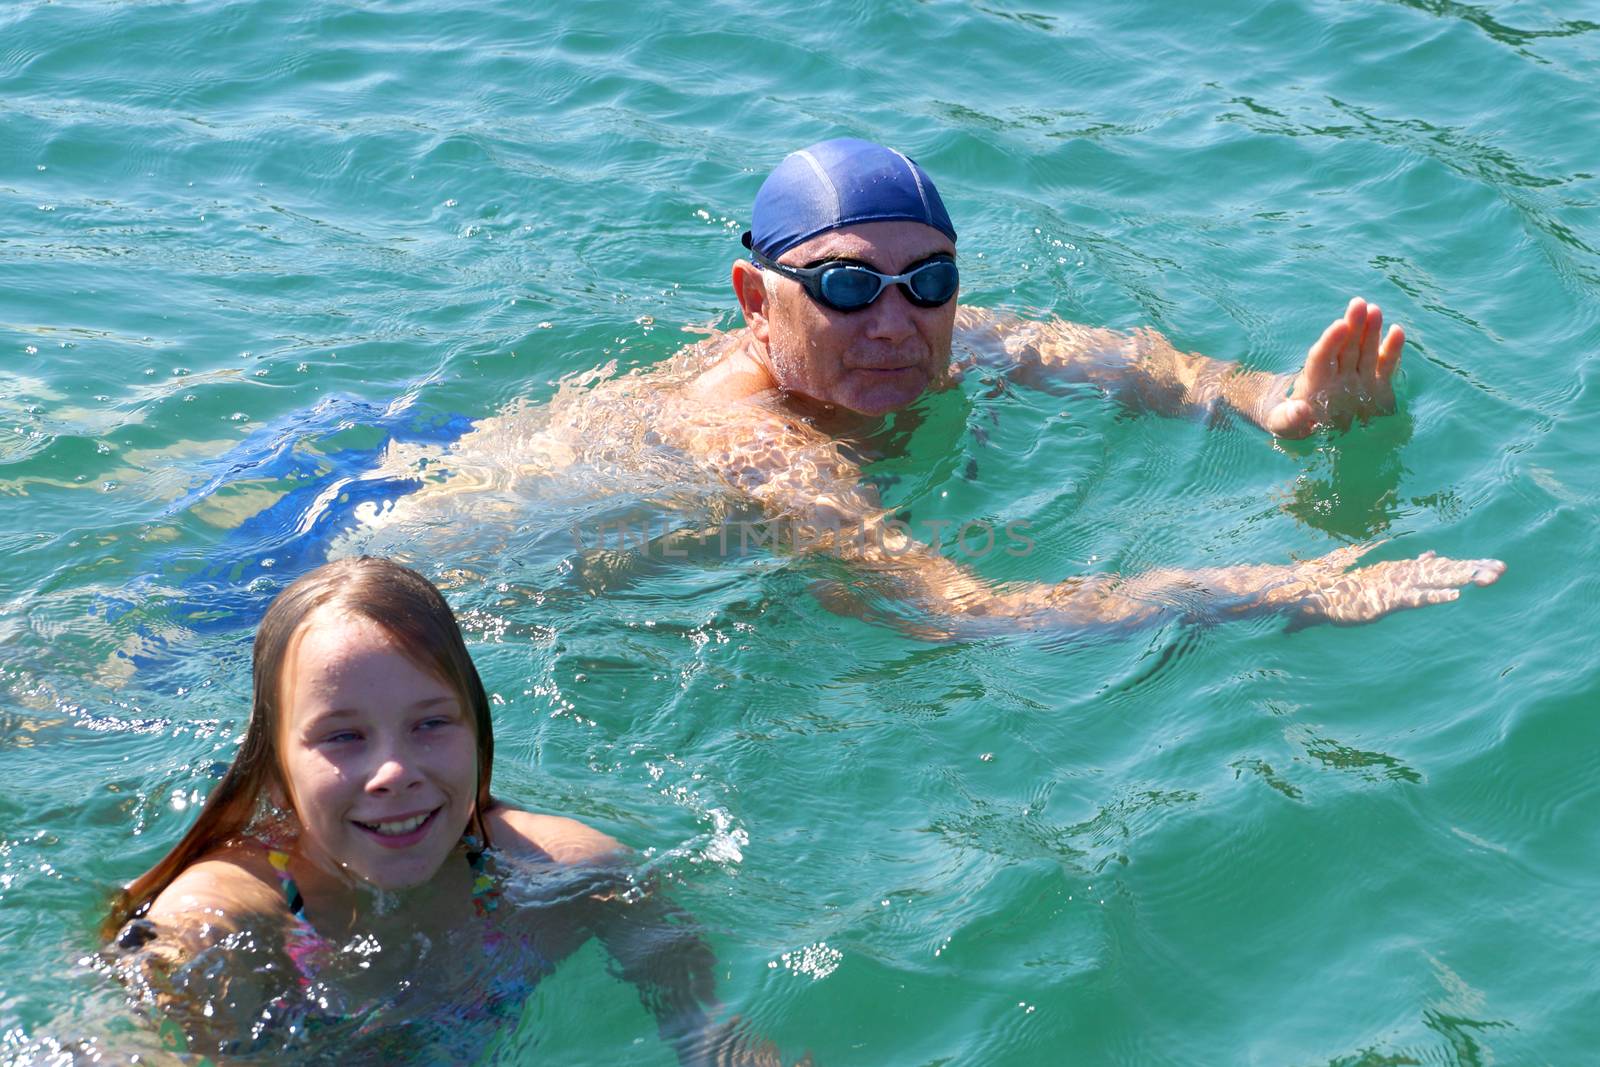 joyful man and daughter swim in the sea close-up